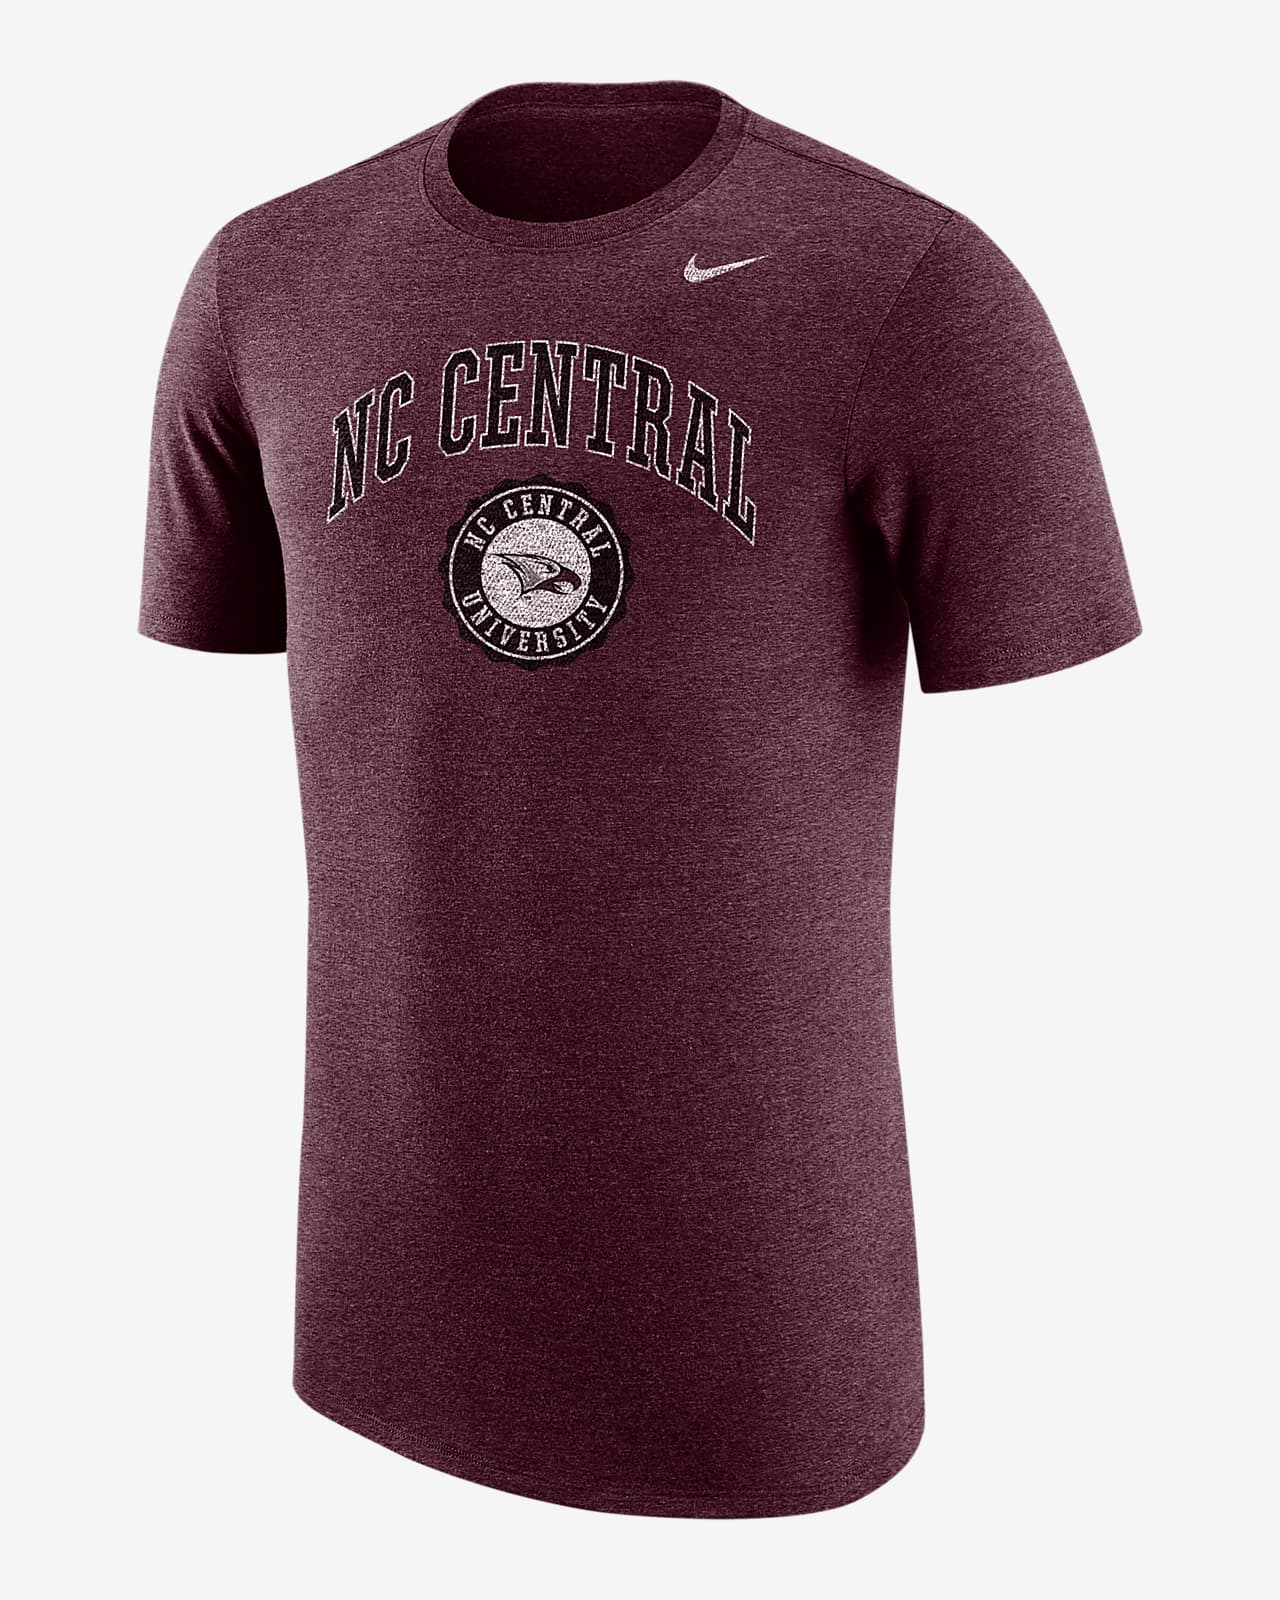 Nike College (North Carolina Central) Men's T-Shirt